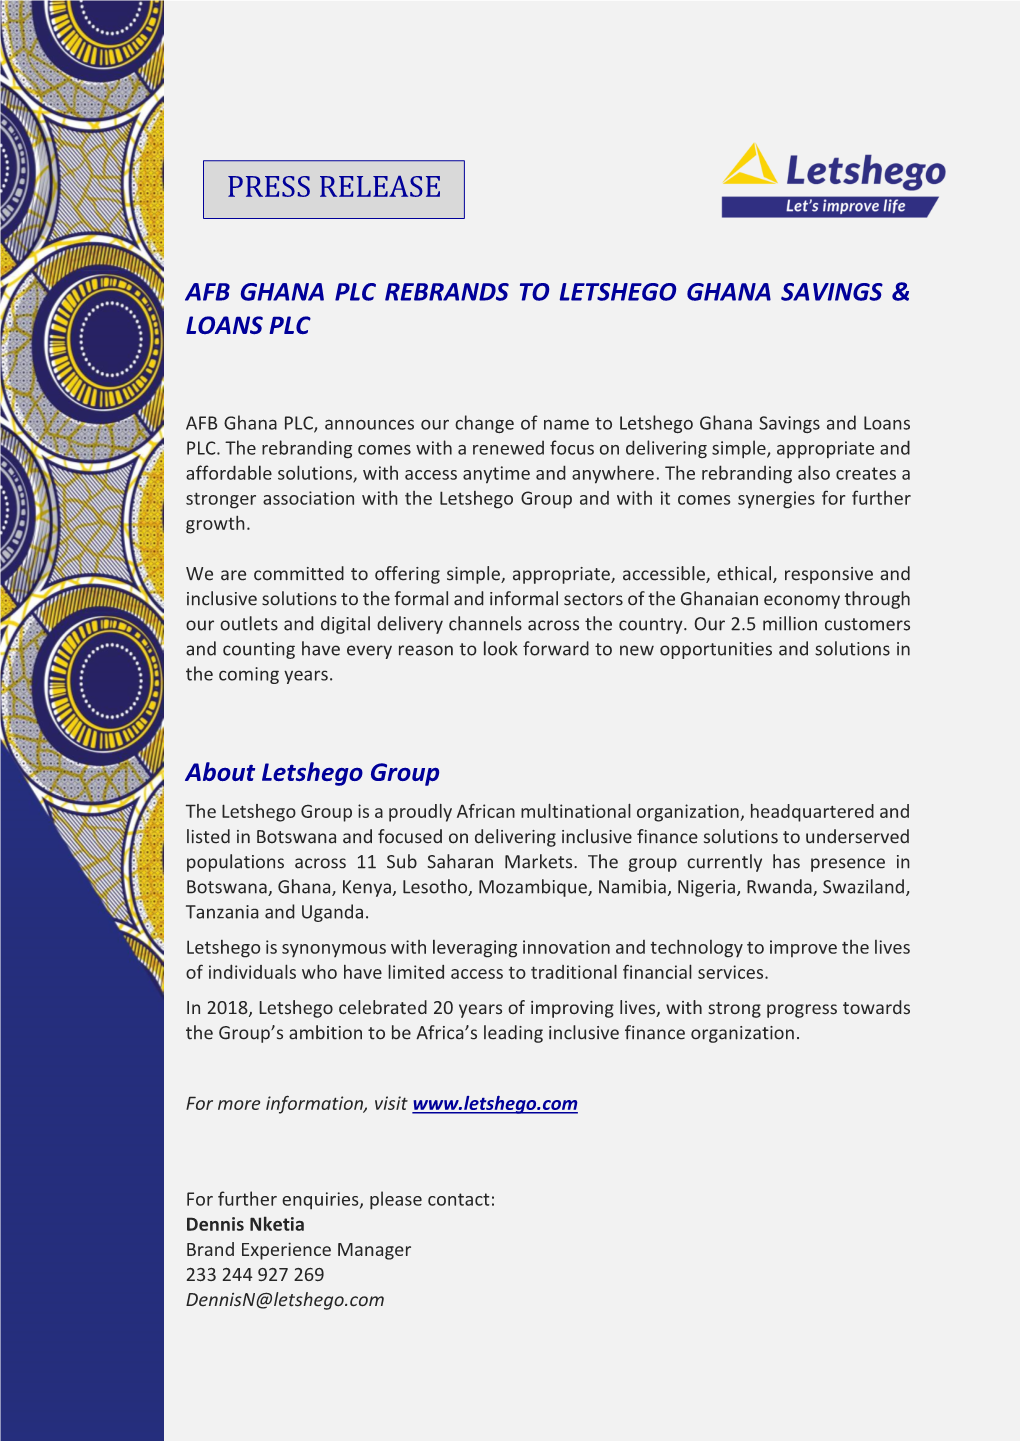 Afb Ghana Plc Rebrands to Letshego Ghana Savings & Loans